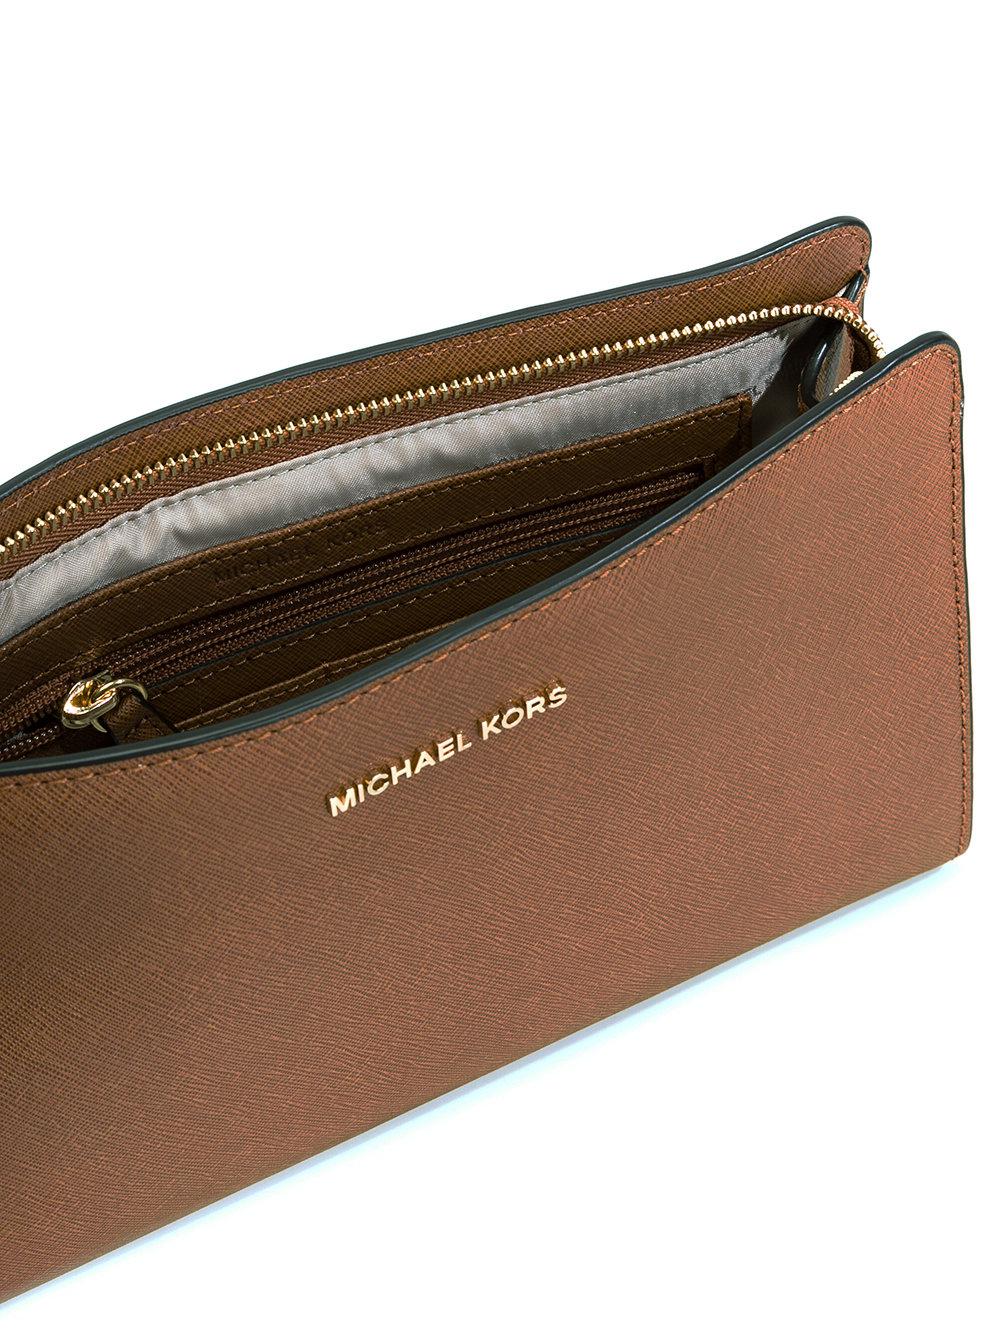 MICHAEL Michael Kors Leather Rectangular Crossbody Bag in Brown - Lyst